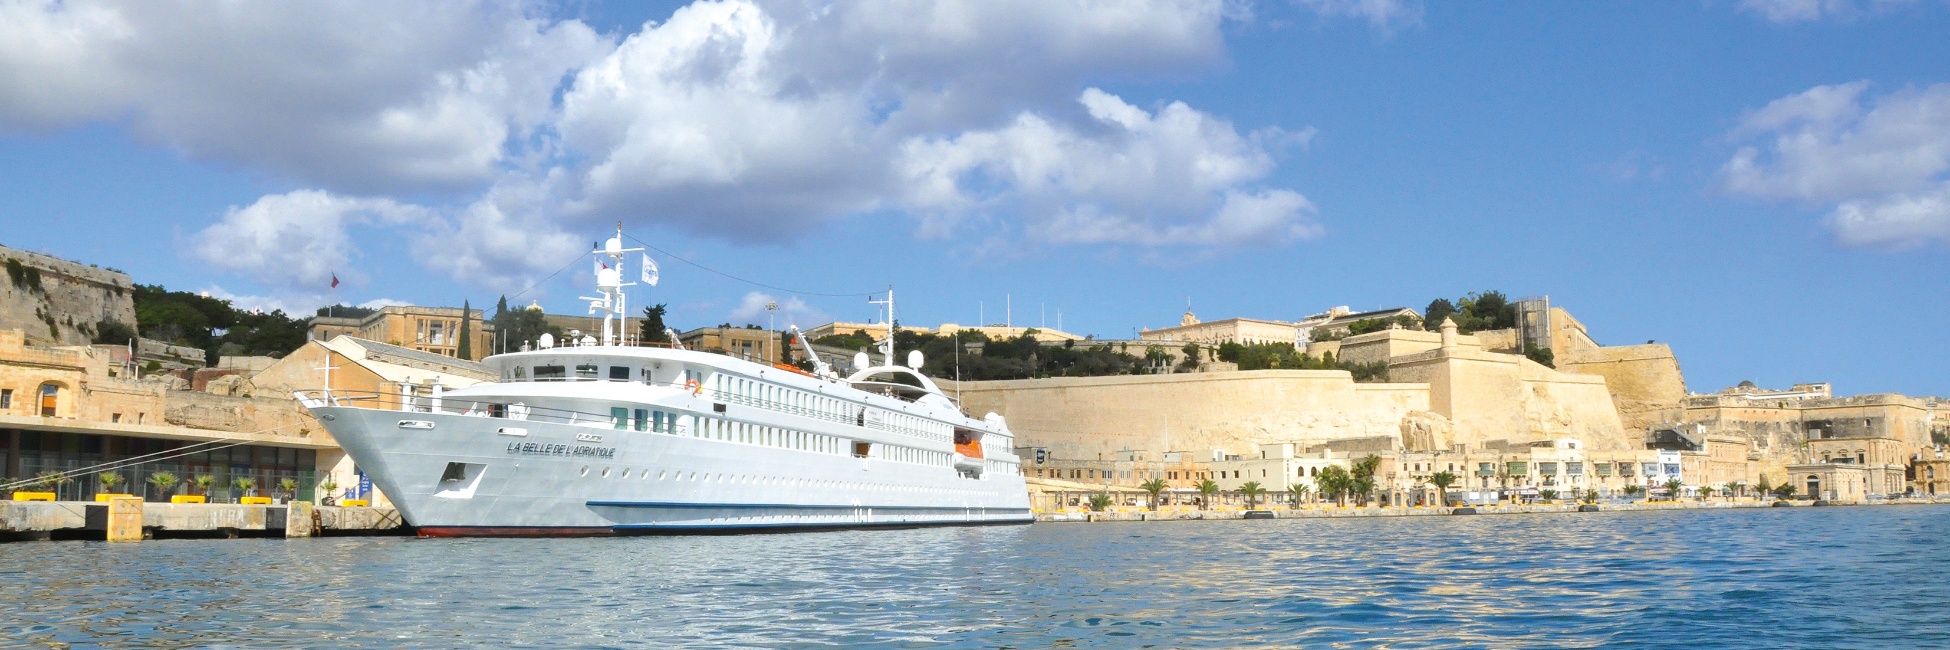 Imágenes del barco MV La Belle de L'adriatique